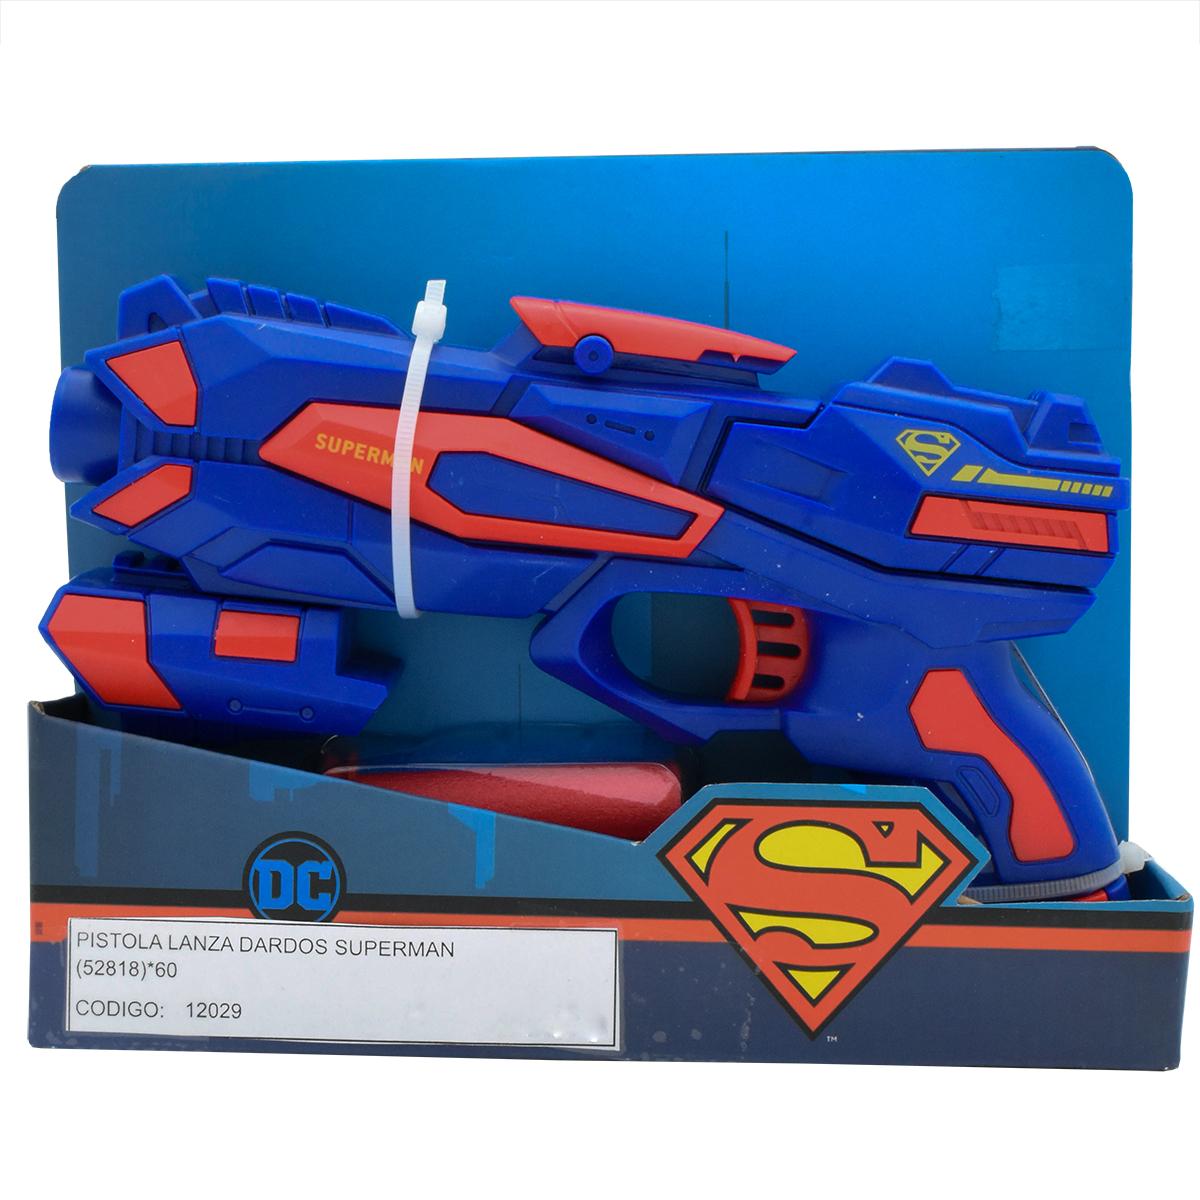 Pistola Lanza Dardos Superman